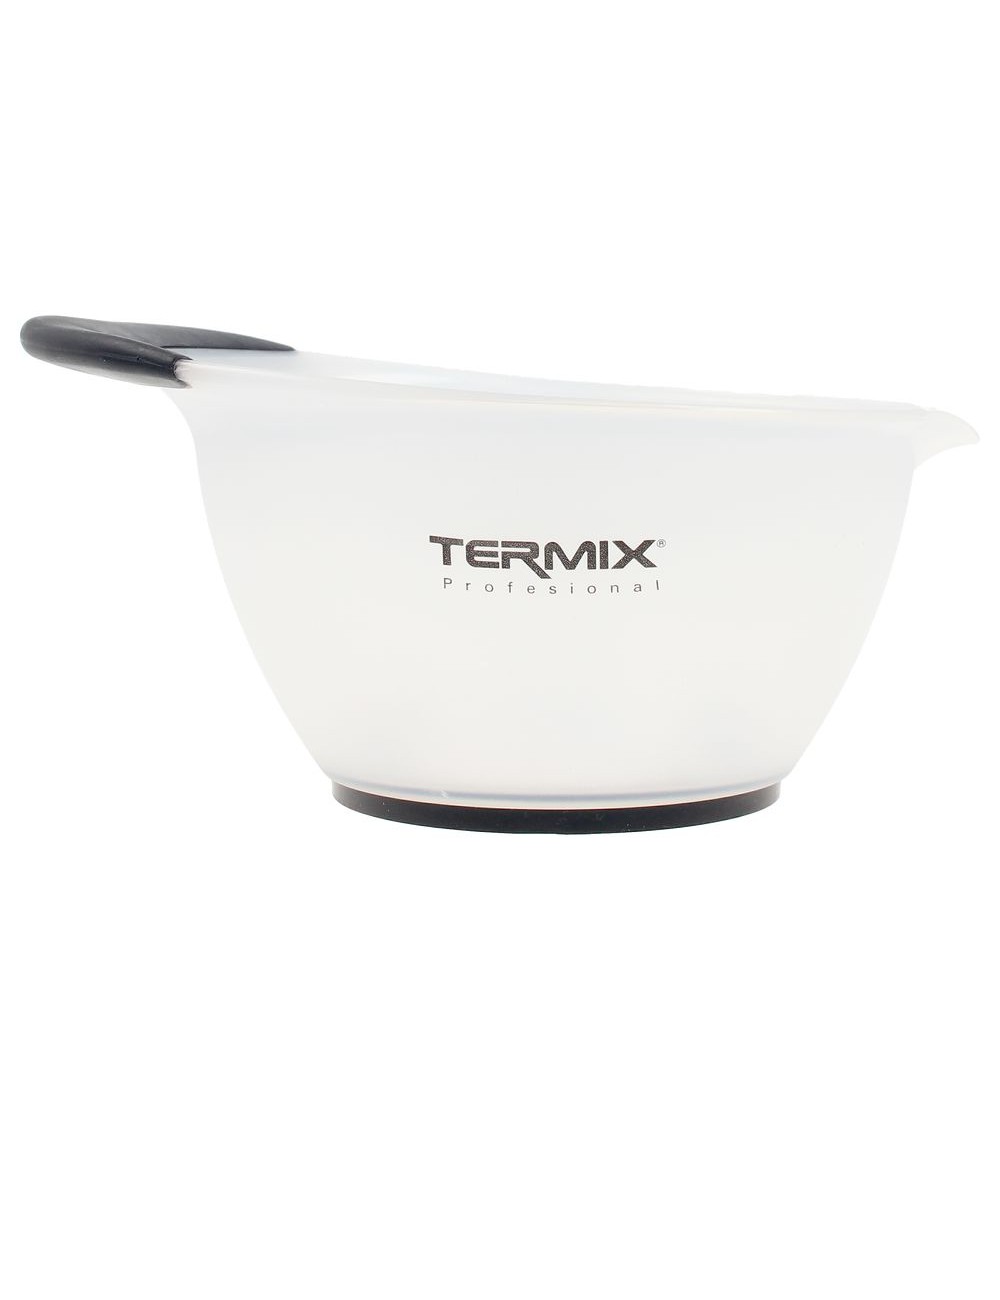 TERMIX PROFESIONAL bowl tintes blanco 1 u